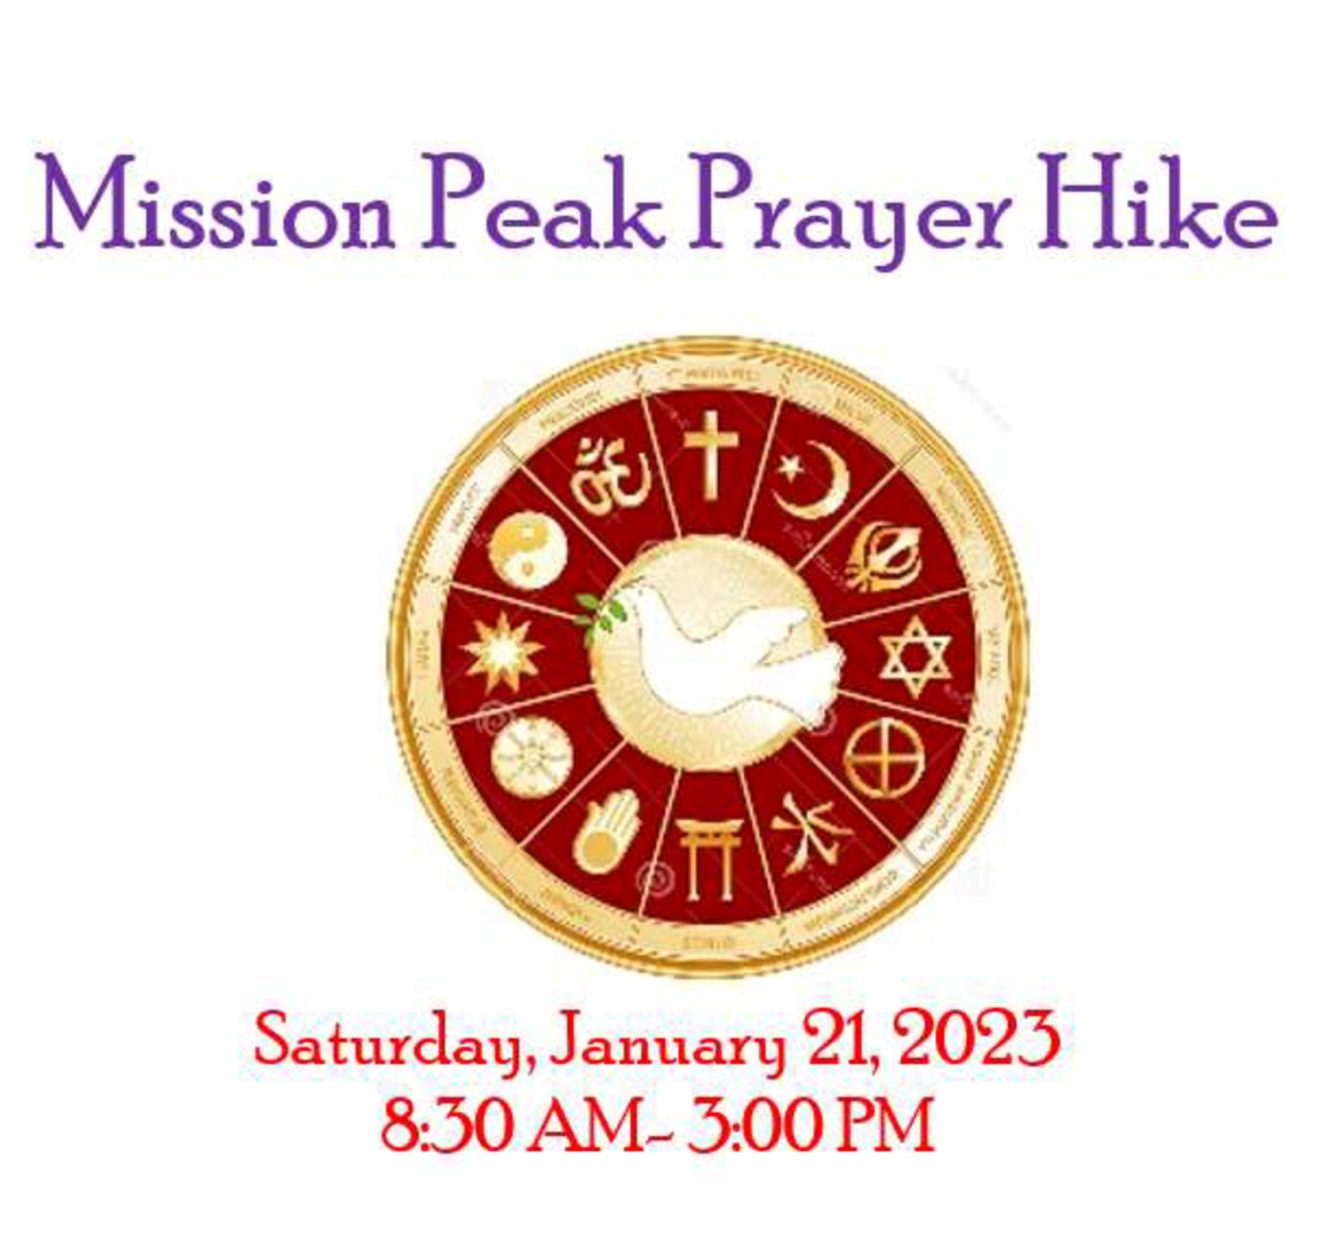 1/21 - 4th Annual Mission Peak Prayer Hike Registration